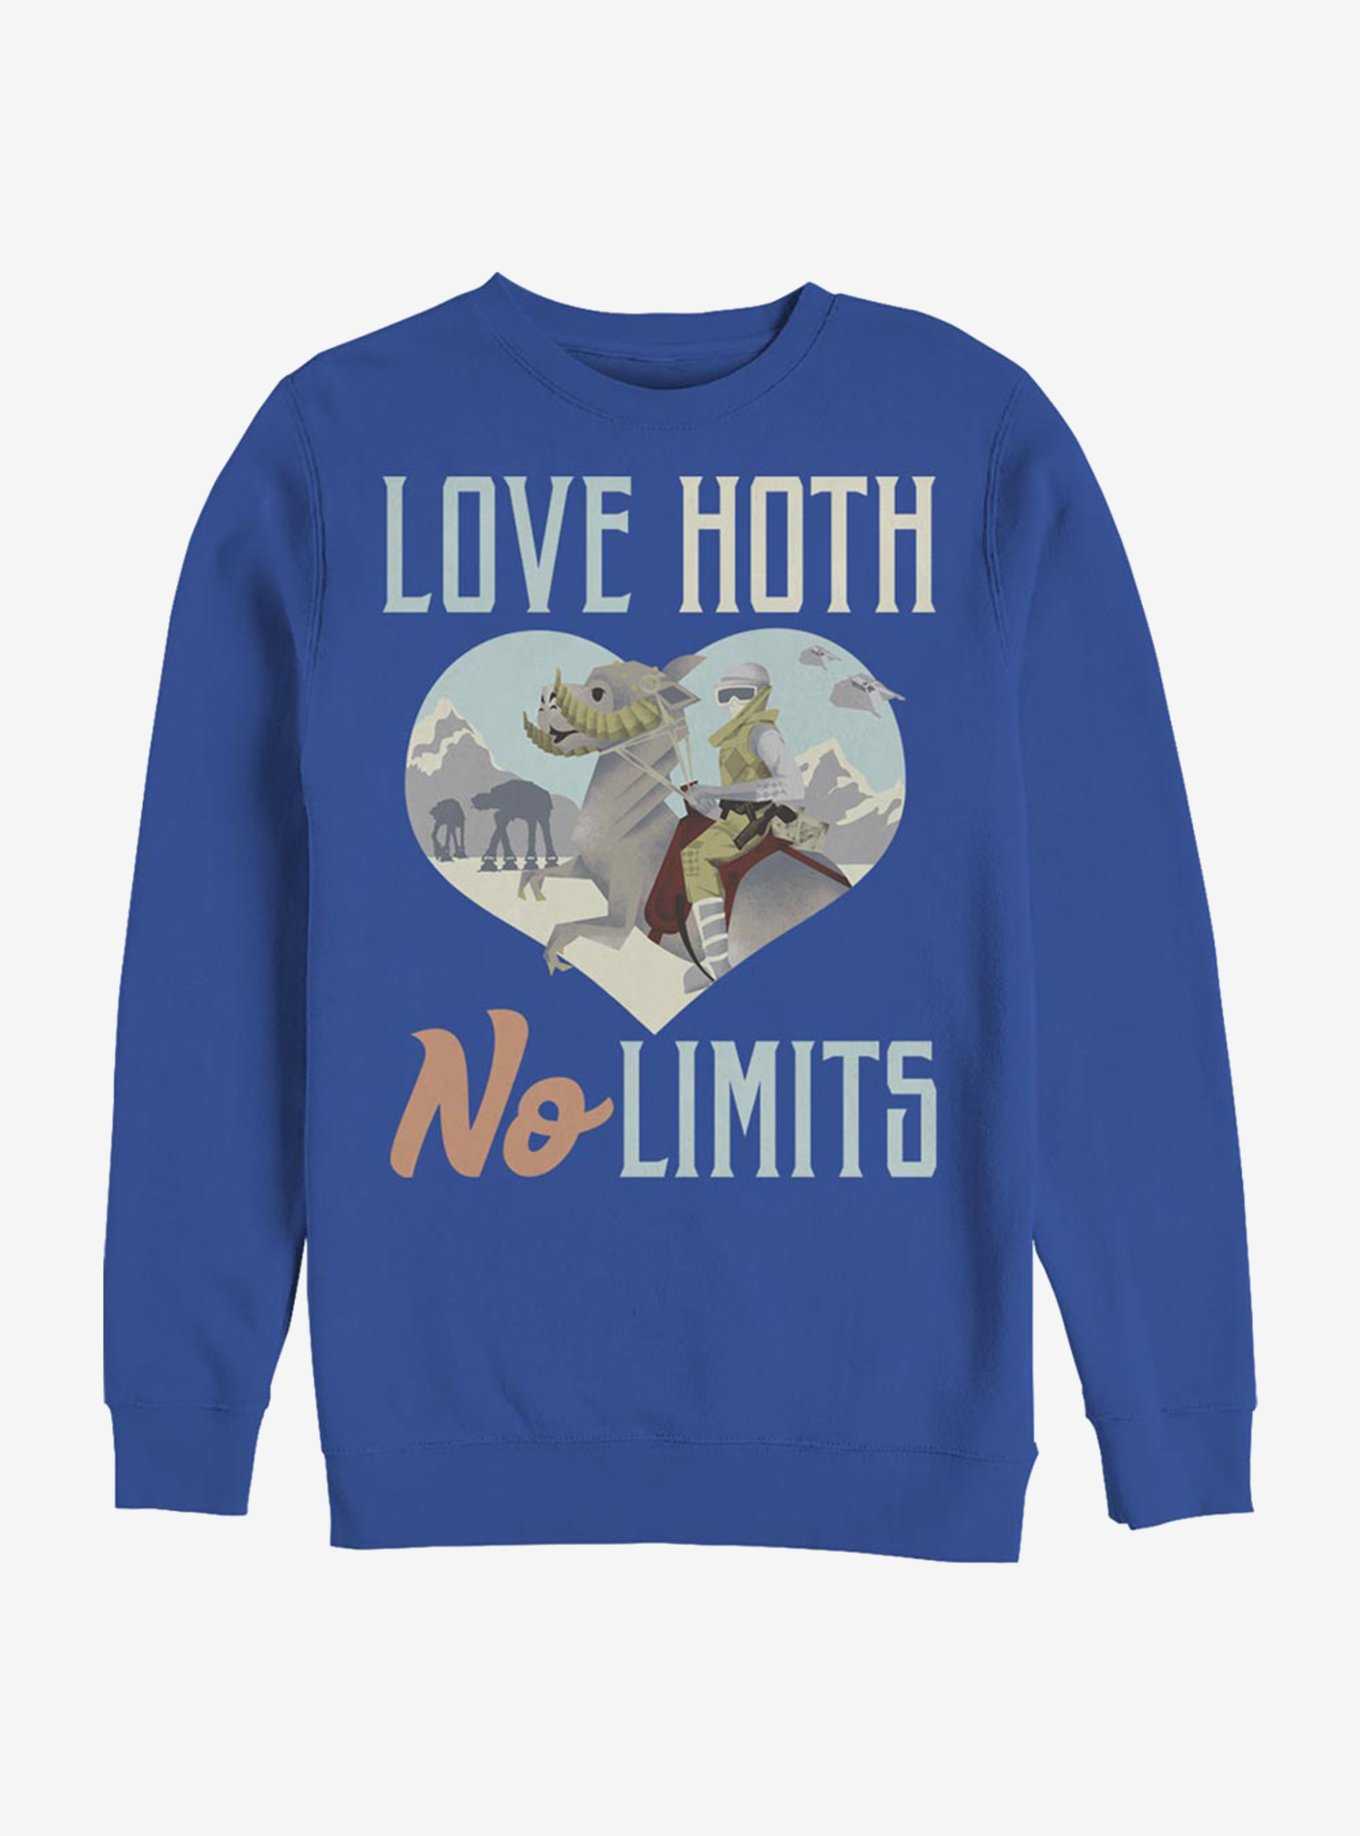 Star Wars Hoth Love Crew Sweatshirt, , hi-res